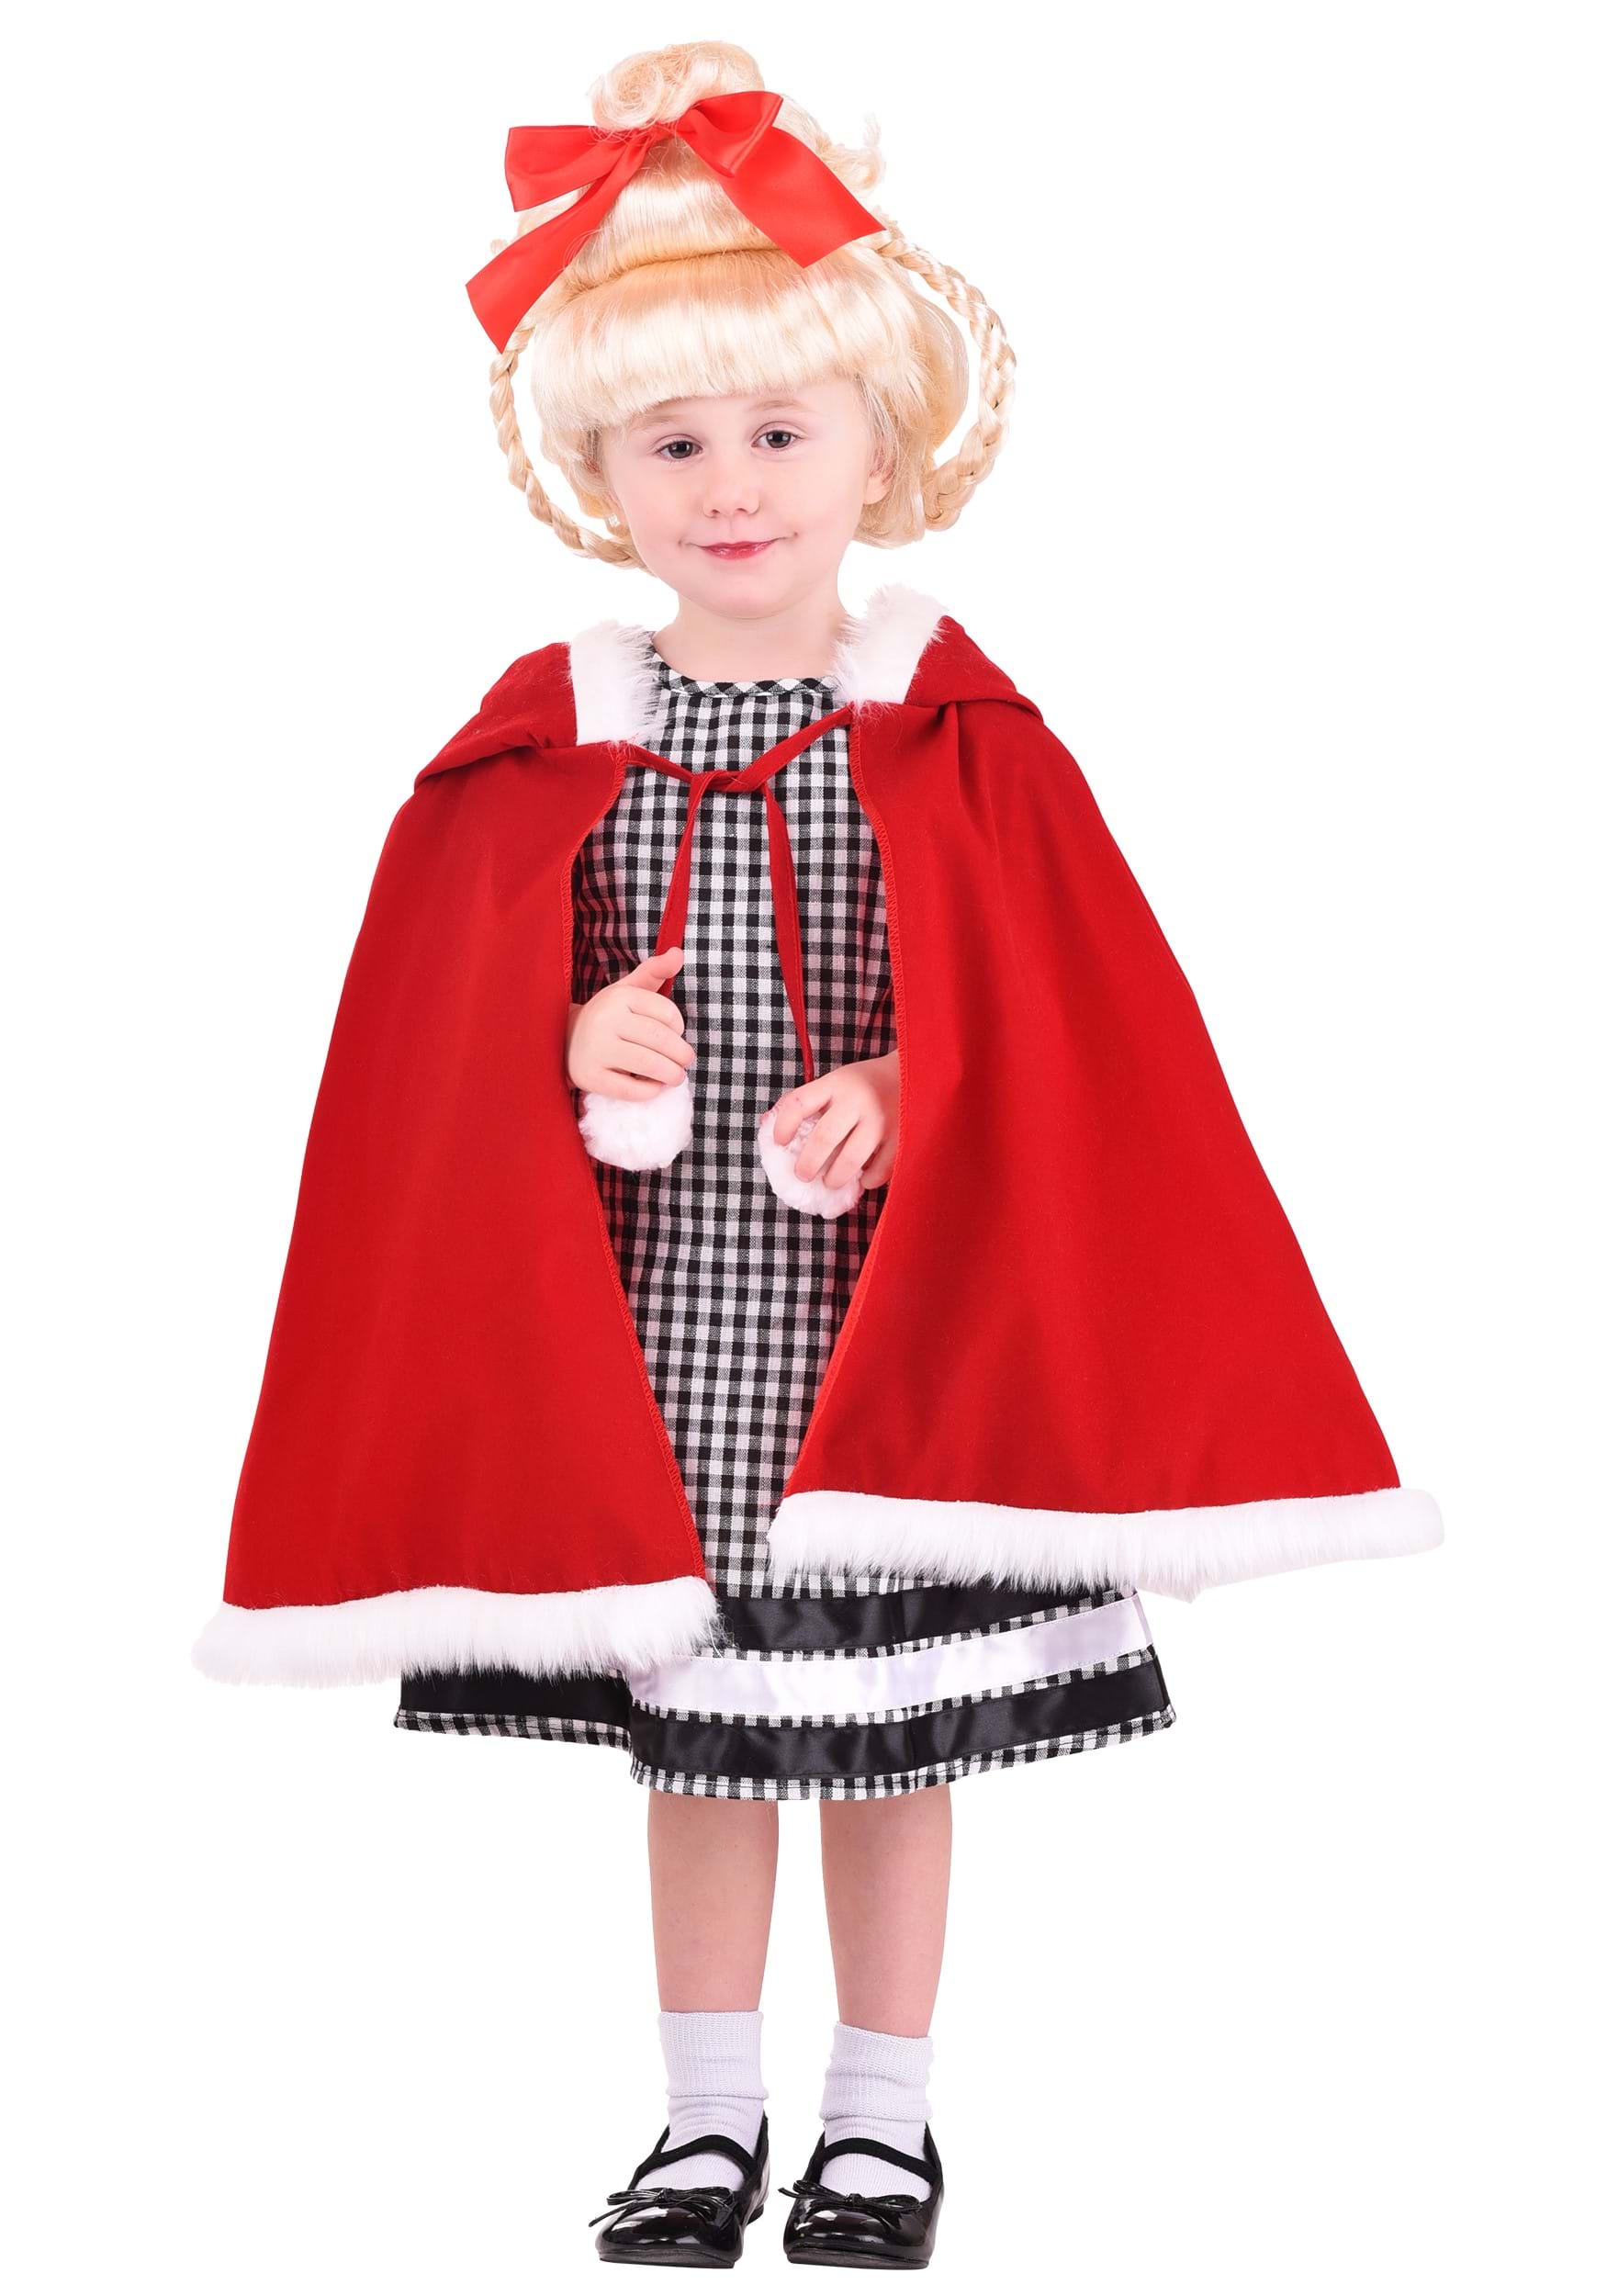 Photos - Fancy Dress Toddler FUN Costumes Dr. Seuss  Cindy Lou Who Costume Dress | How the Grinc 